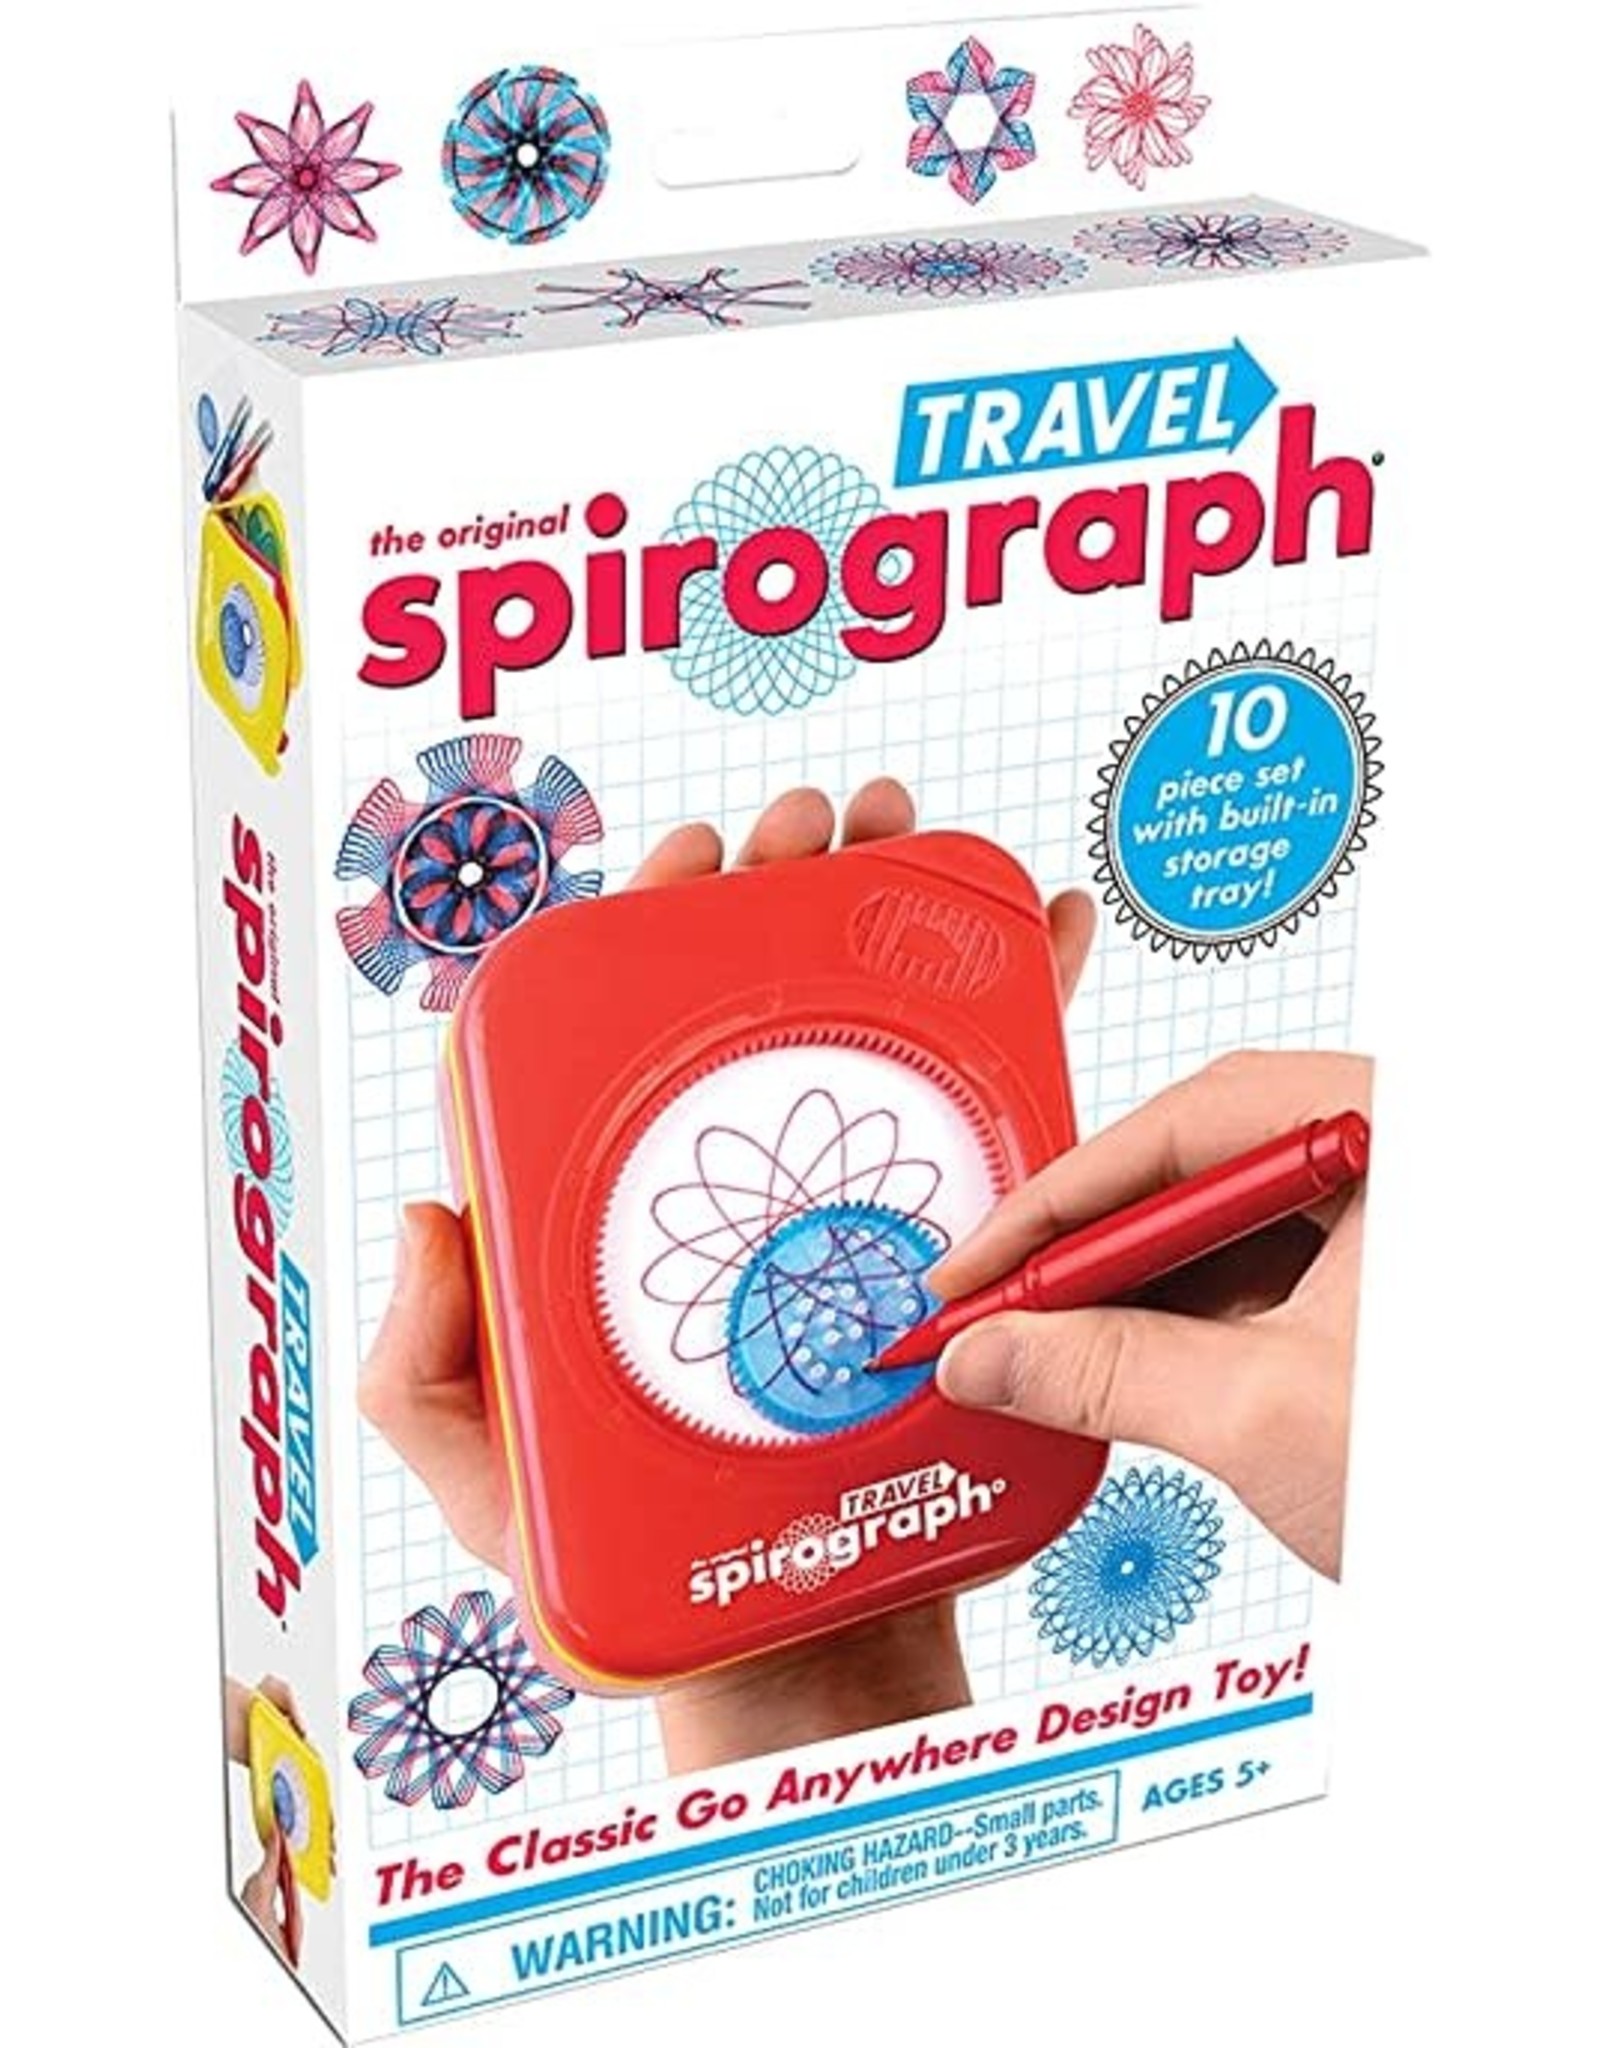 Spirograph - Travel